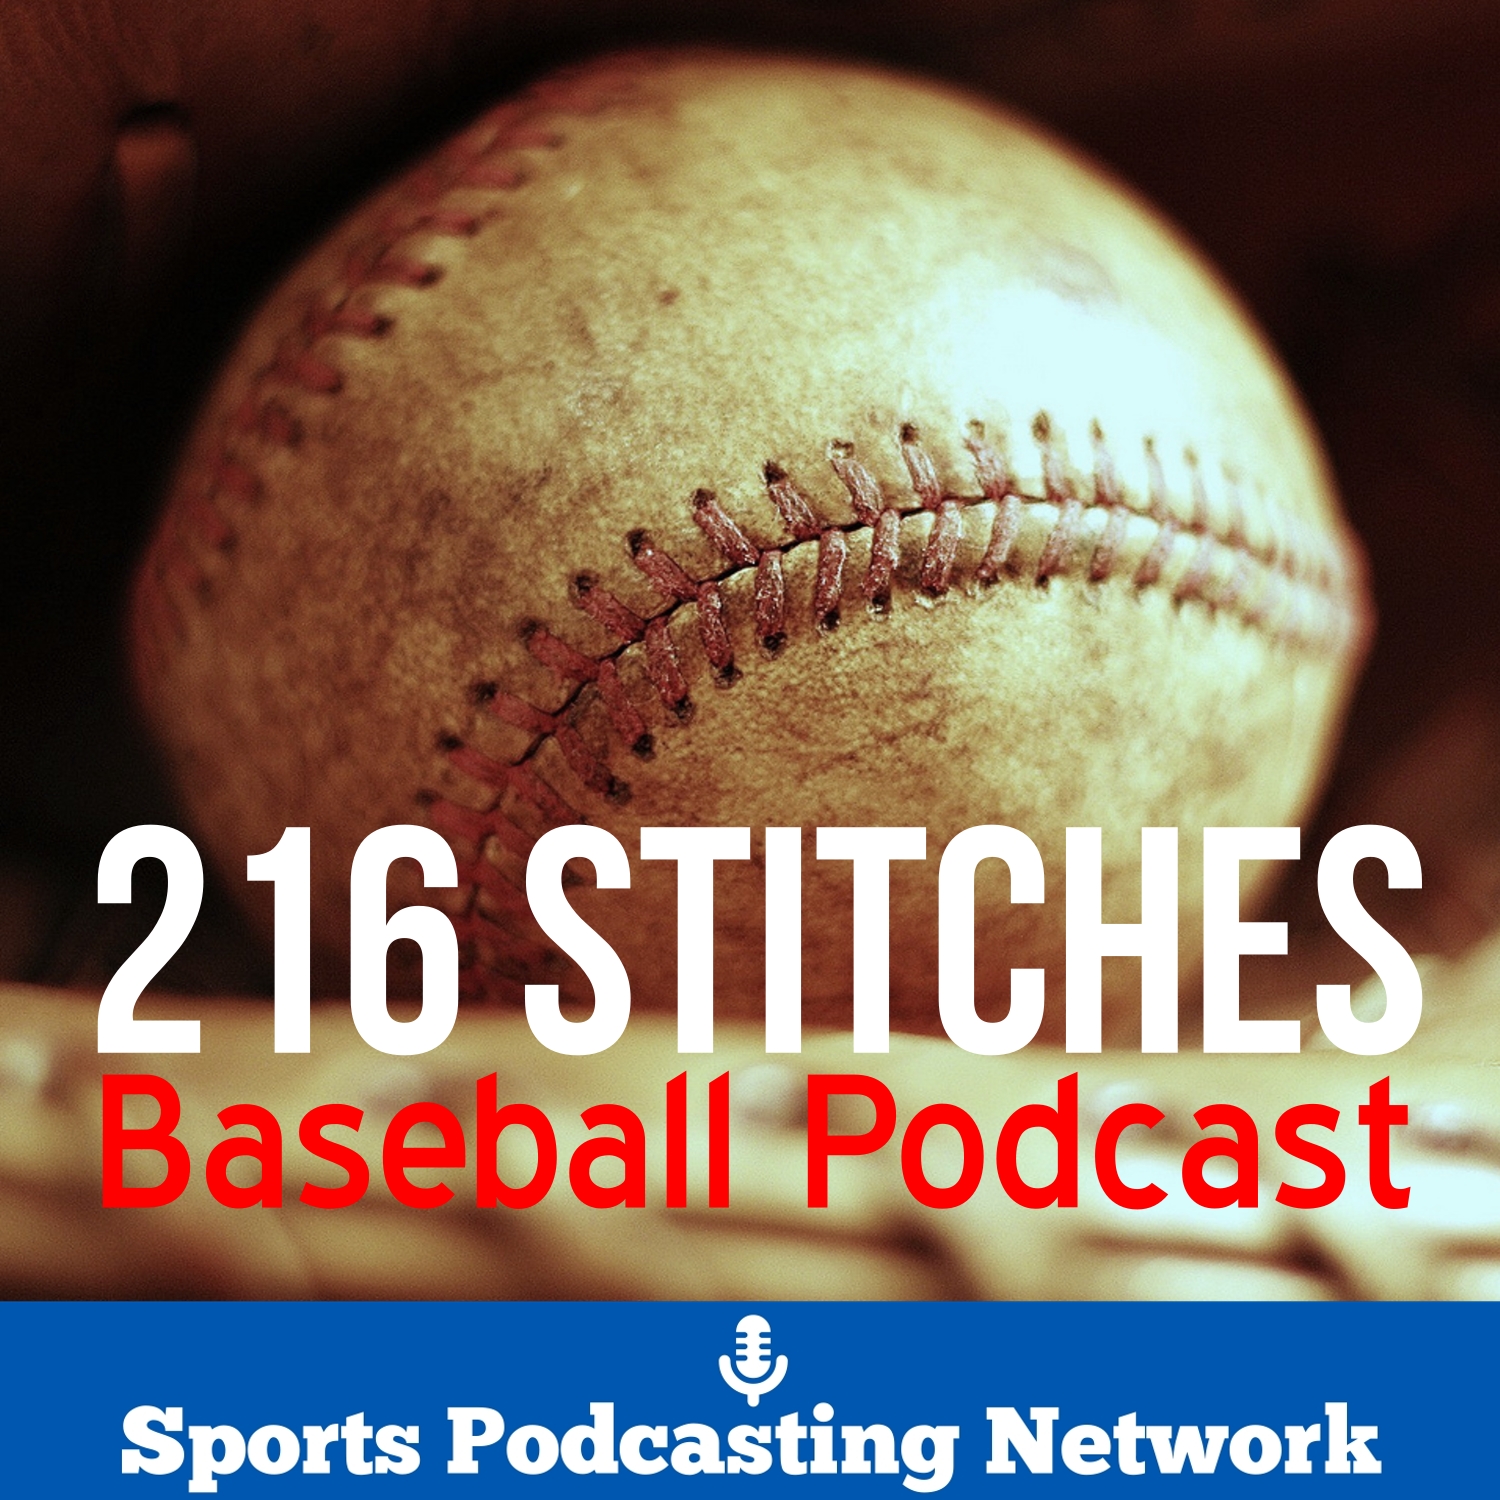 216 Stitches A Baseball Podcast – Sports Podcasting Network